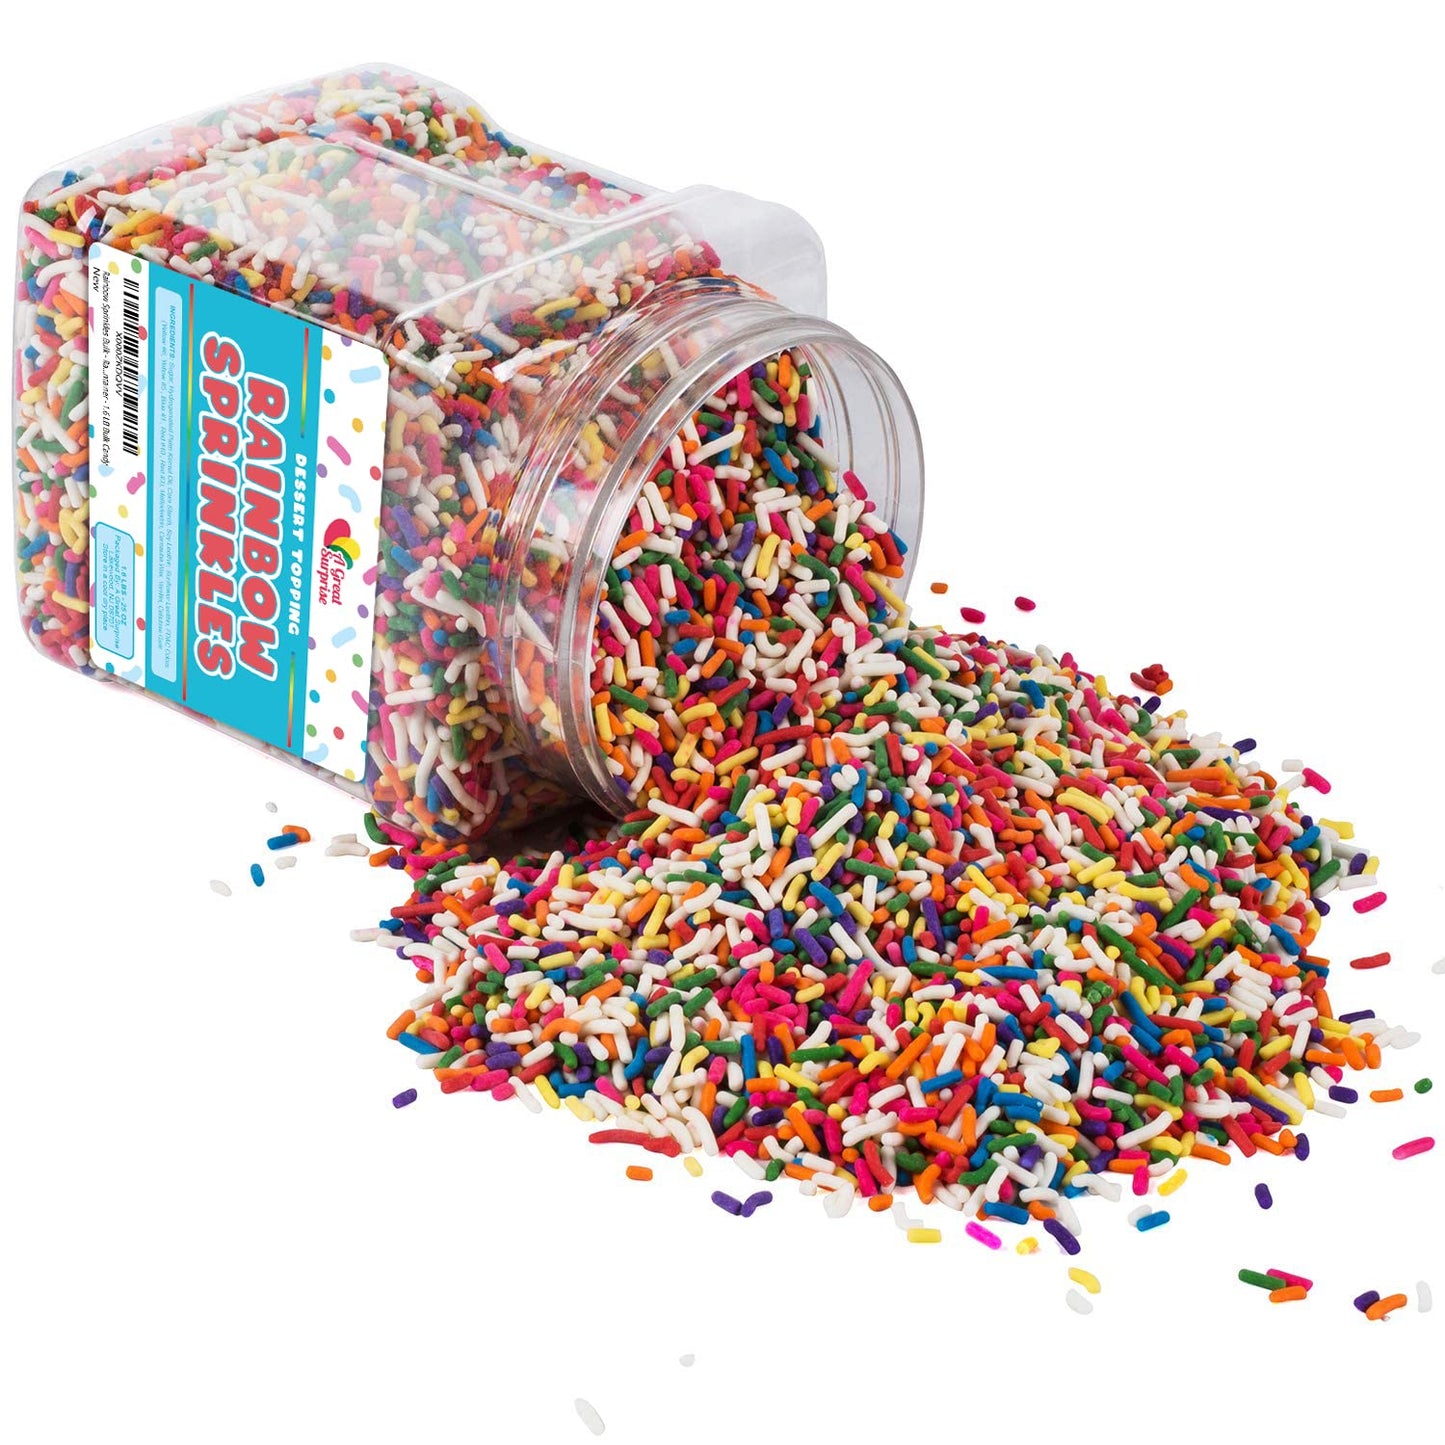 Rainbow Sprinkles Bulk - Rainbow Jimmies in Resealable Container - 1.6 LB Bulk Candy